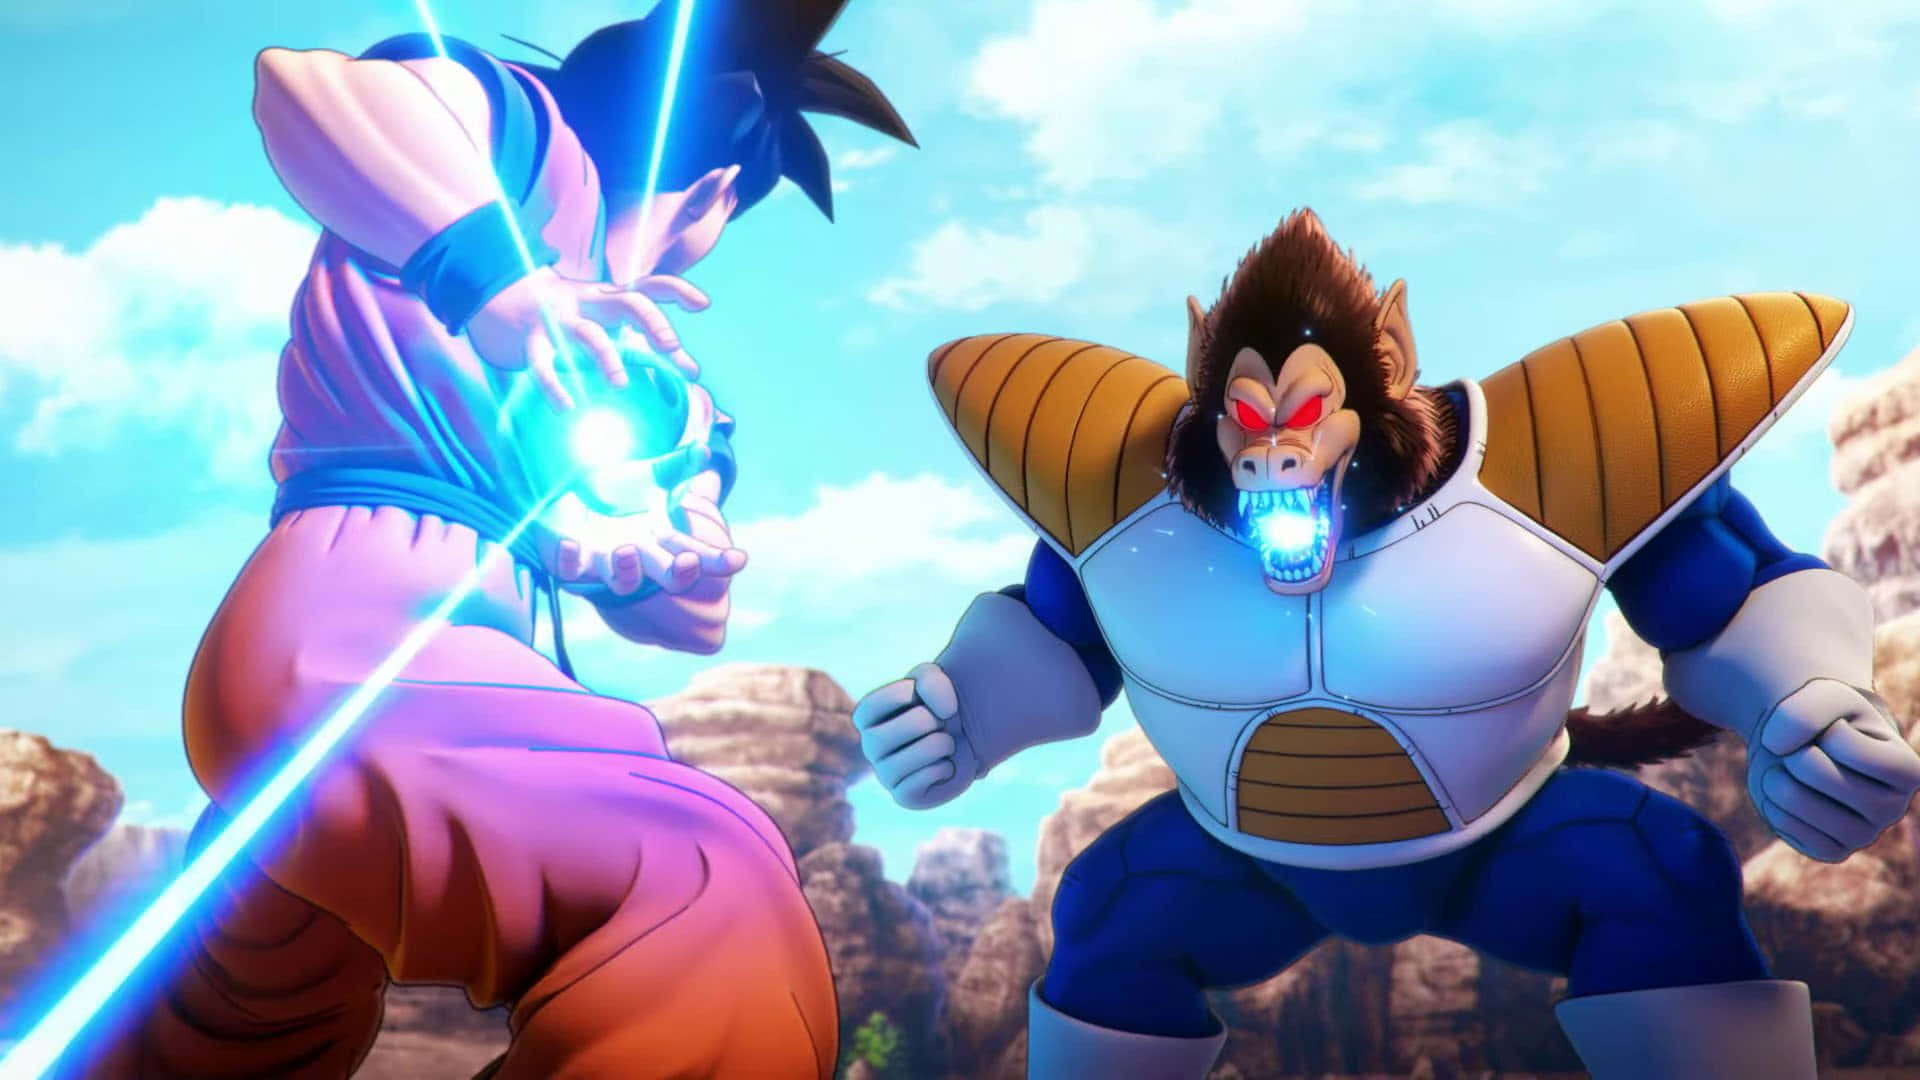 Goku and Vegeta team up against Frieza